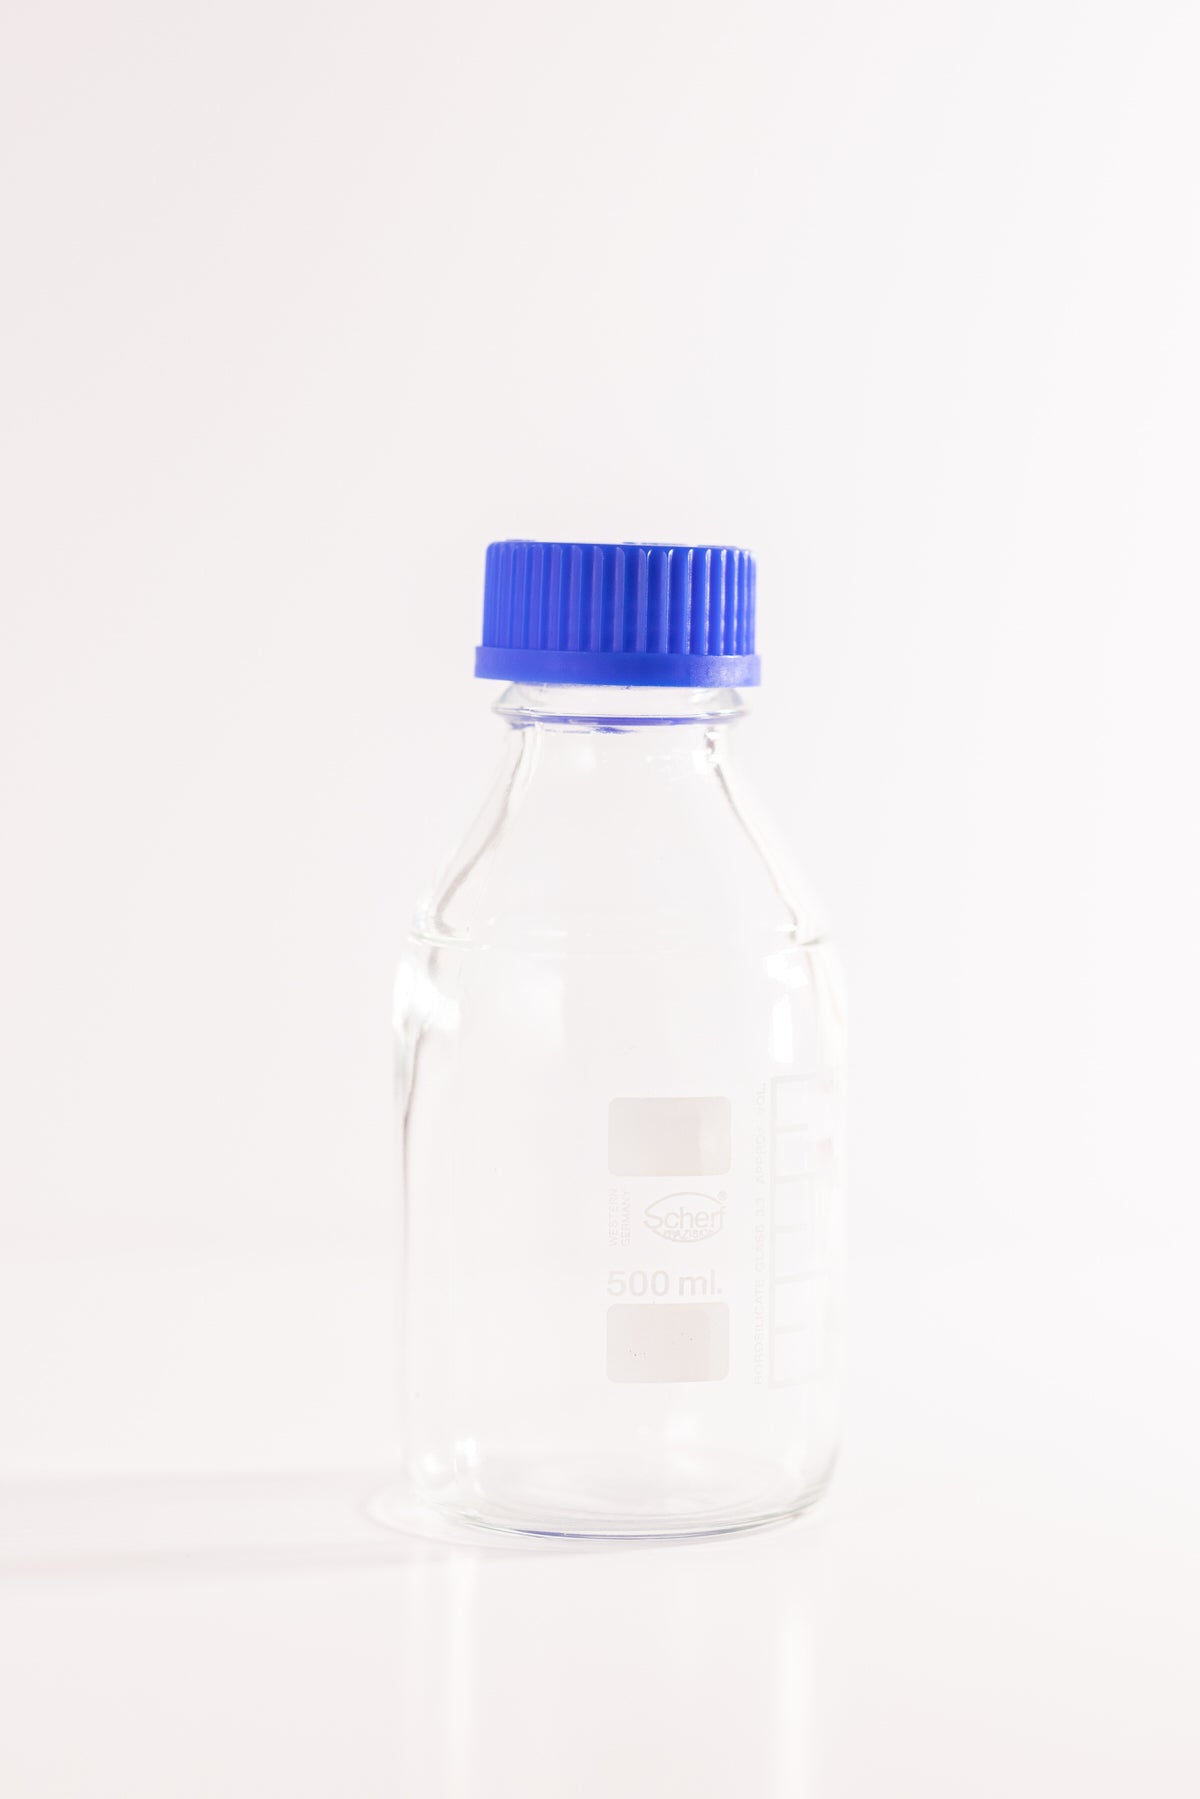 Schott Duran , Laboratory Bottle 500ml with GL45 Screw Cap Air Tight Seal